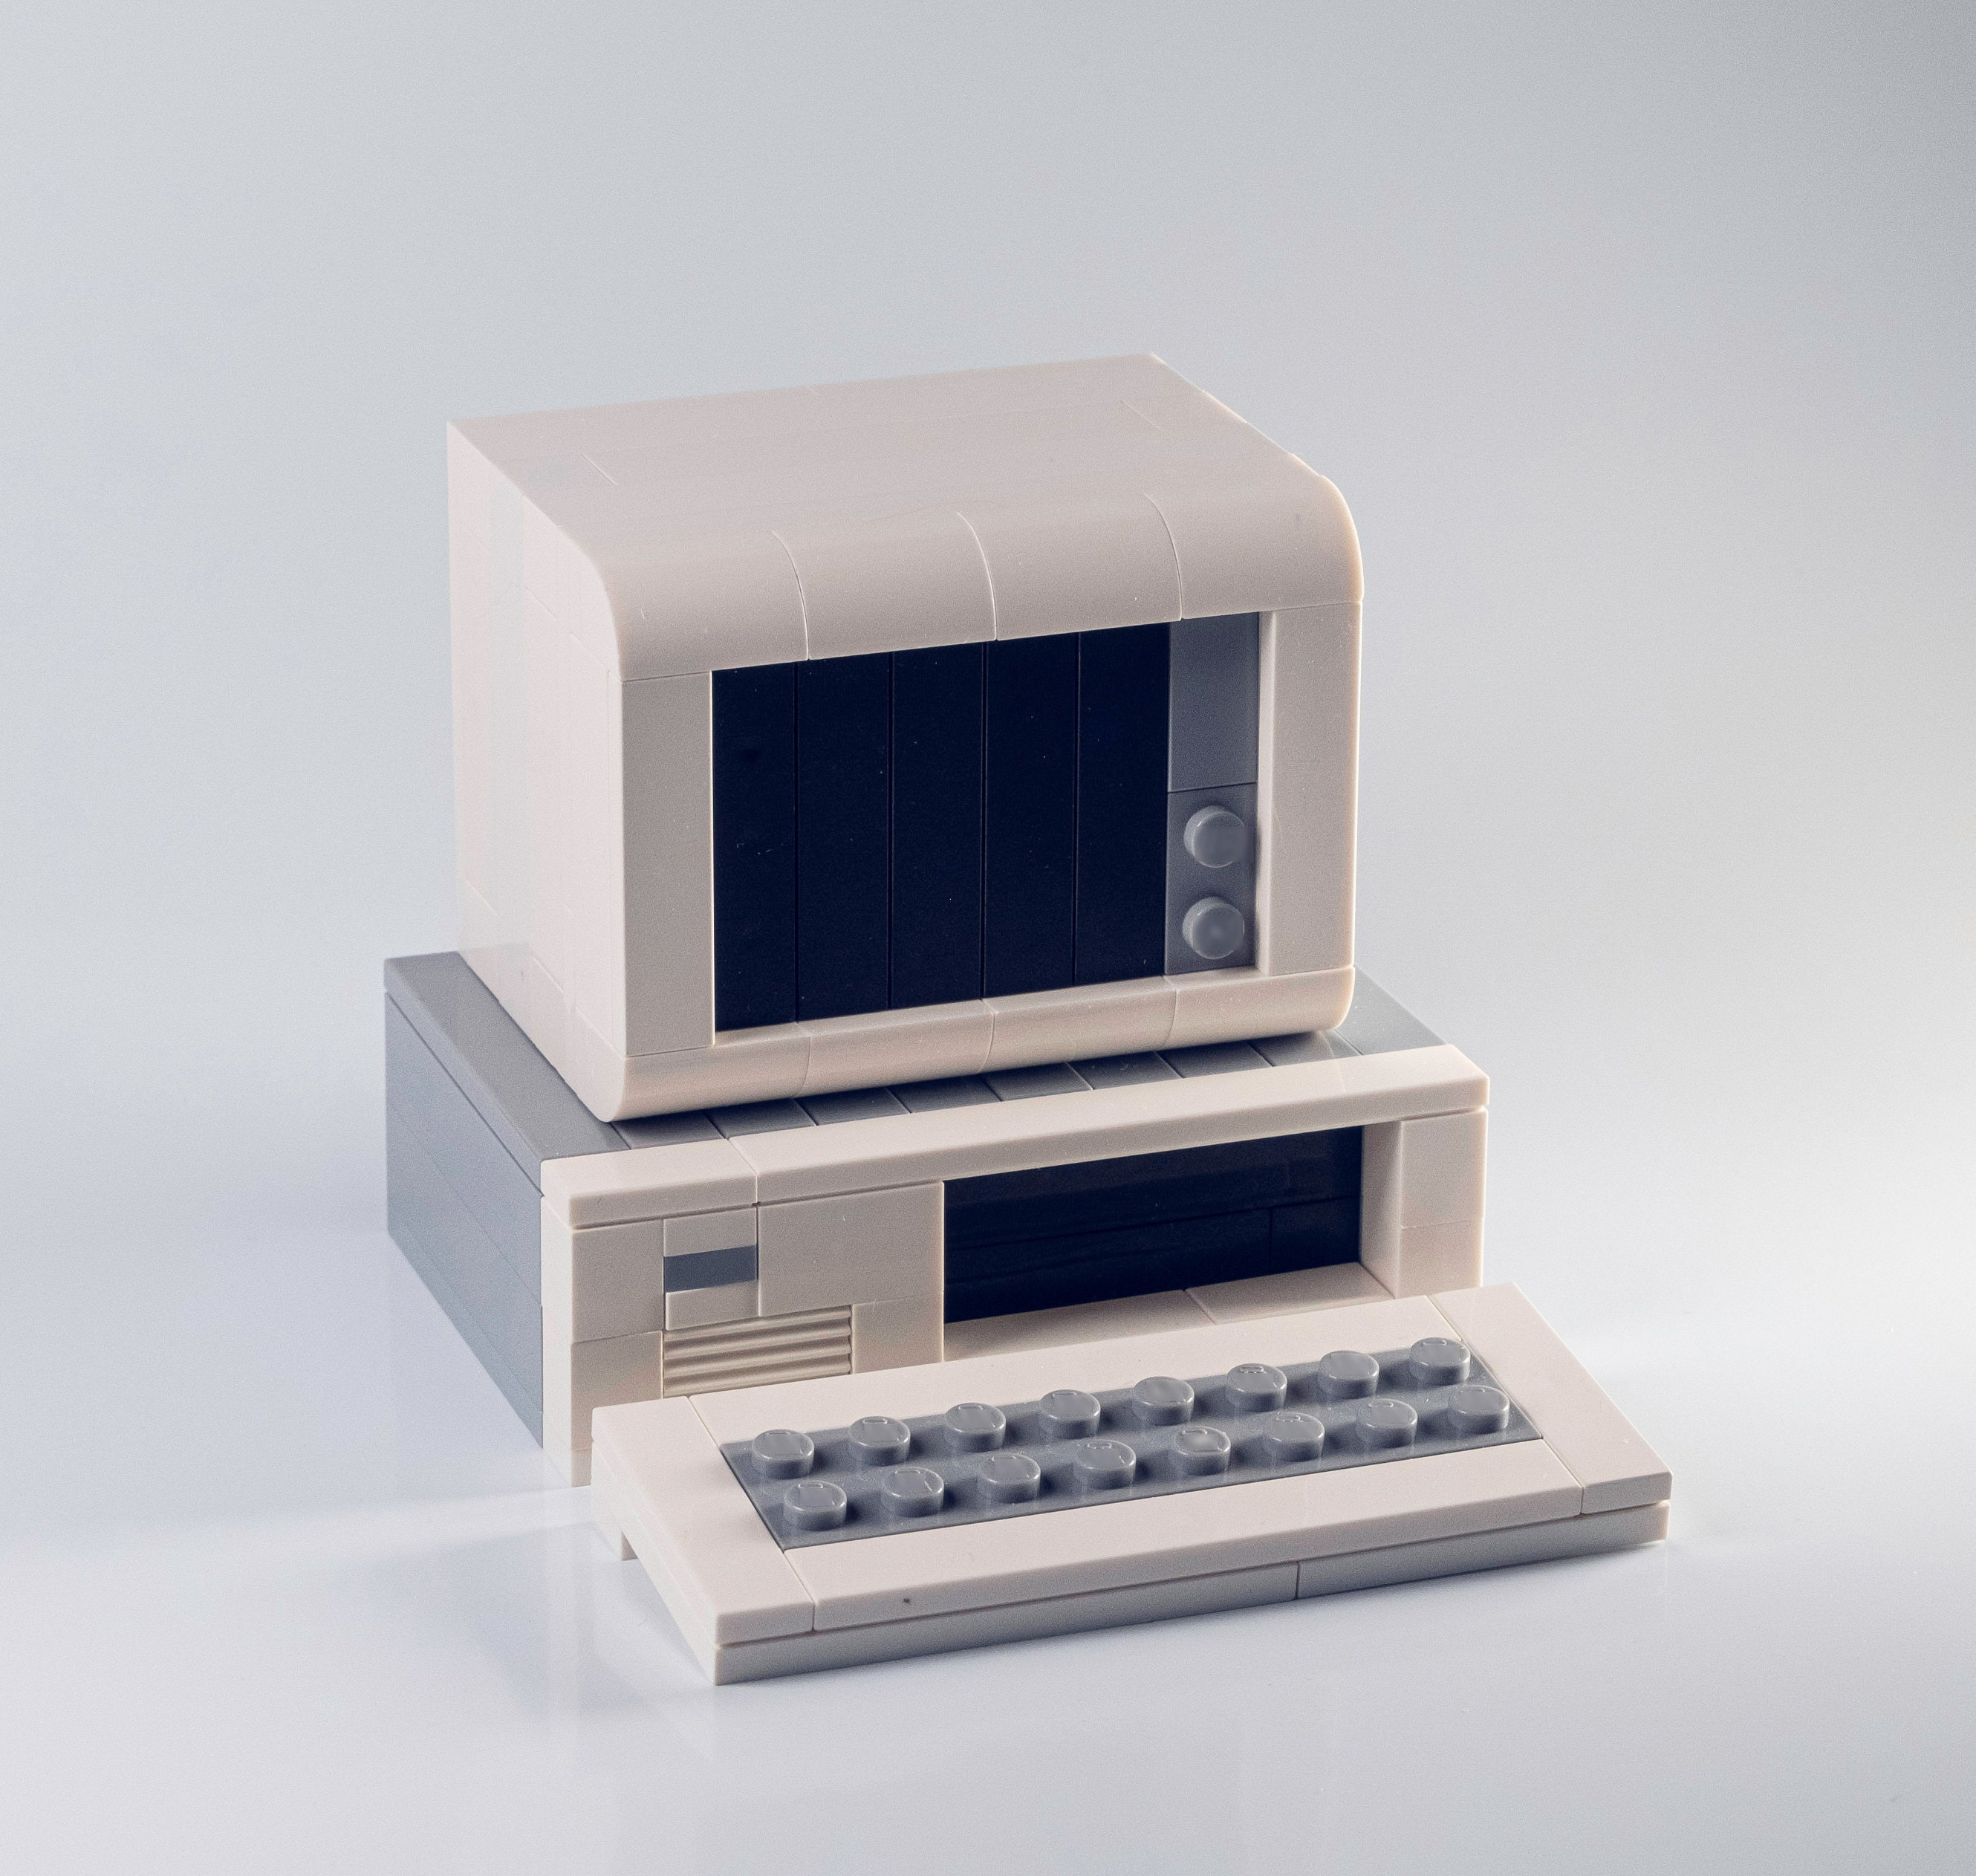 BRICKKK Desktop Computer Model Building Set - Creative Adult Collectible  for Home or Office Display